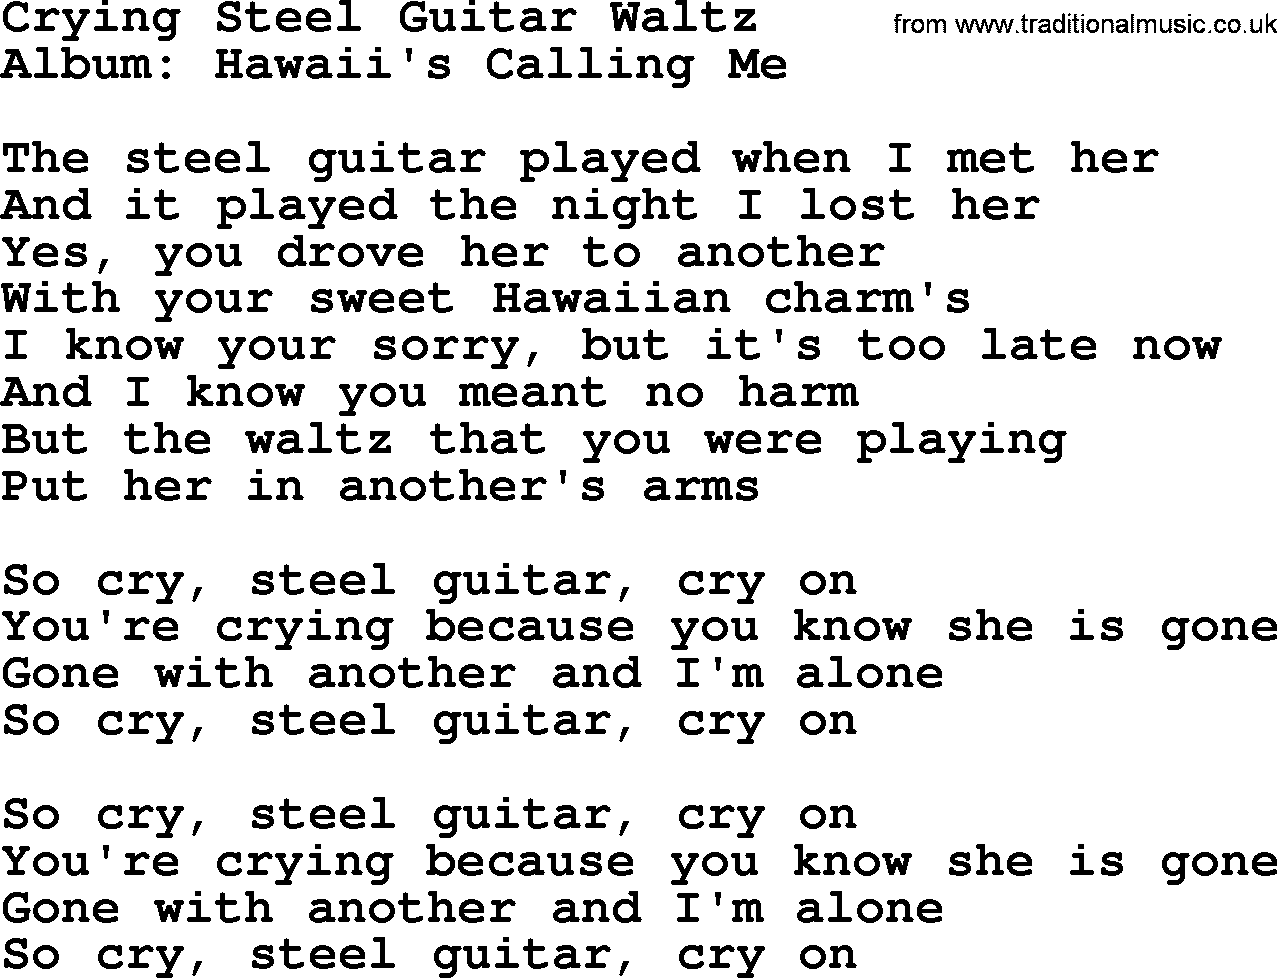 Marty Robbins song: Crying Steel Guitar Waltz, lyrics